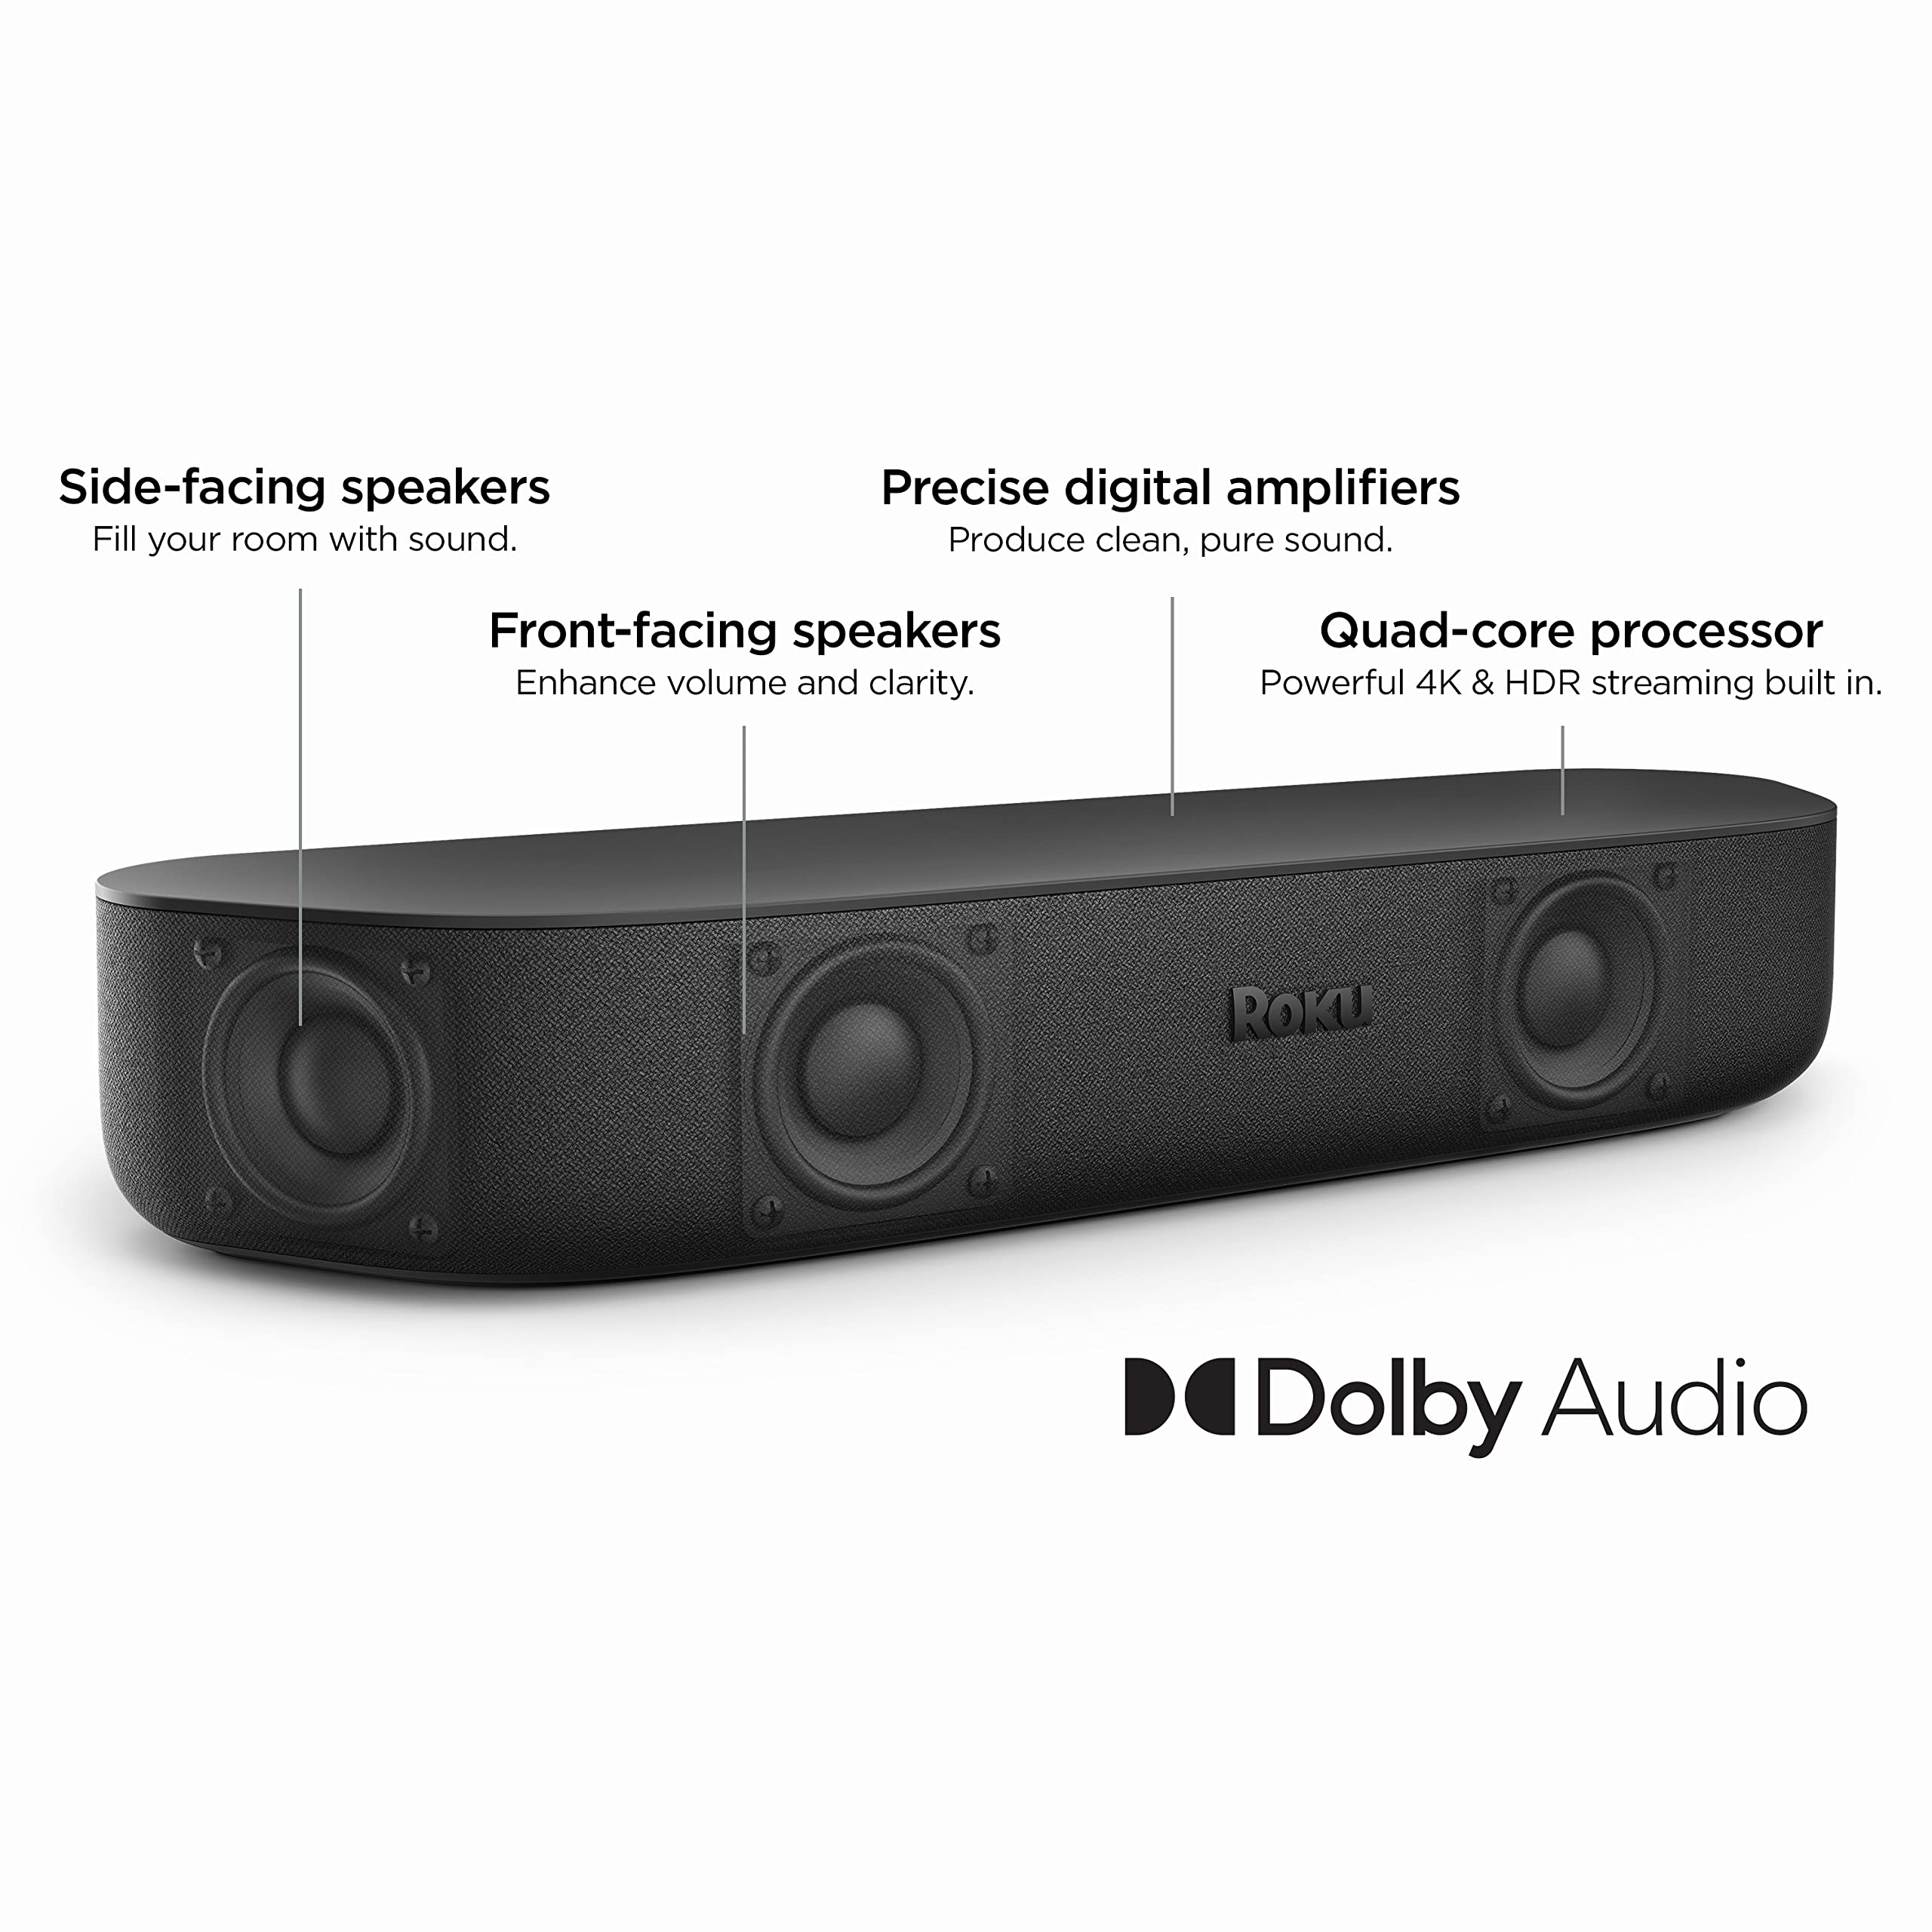 Roku Streambar & Roku Wireless Bass | 4K HDR Streaming Device & Premium Soundbar All in One, Wireless Subwoofer, Roku Voice Remote, Free & Live TV